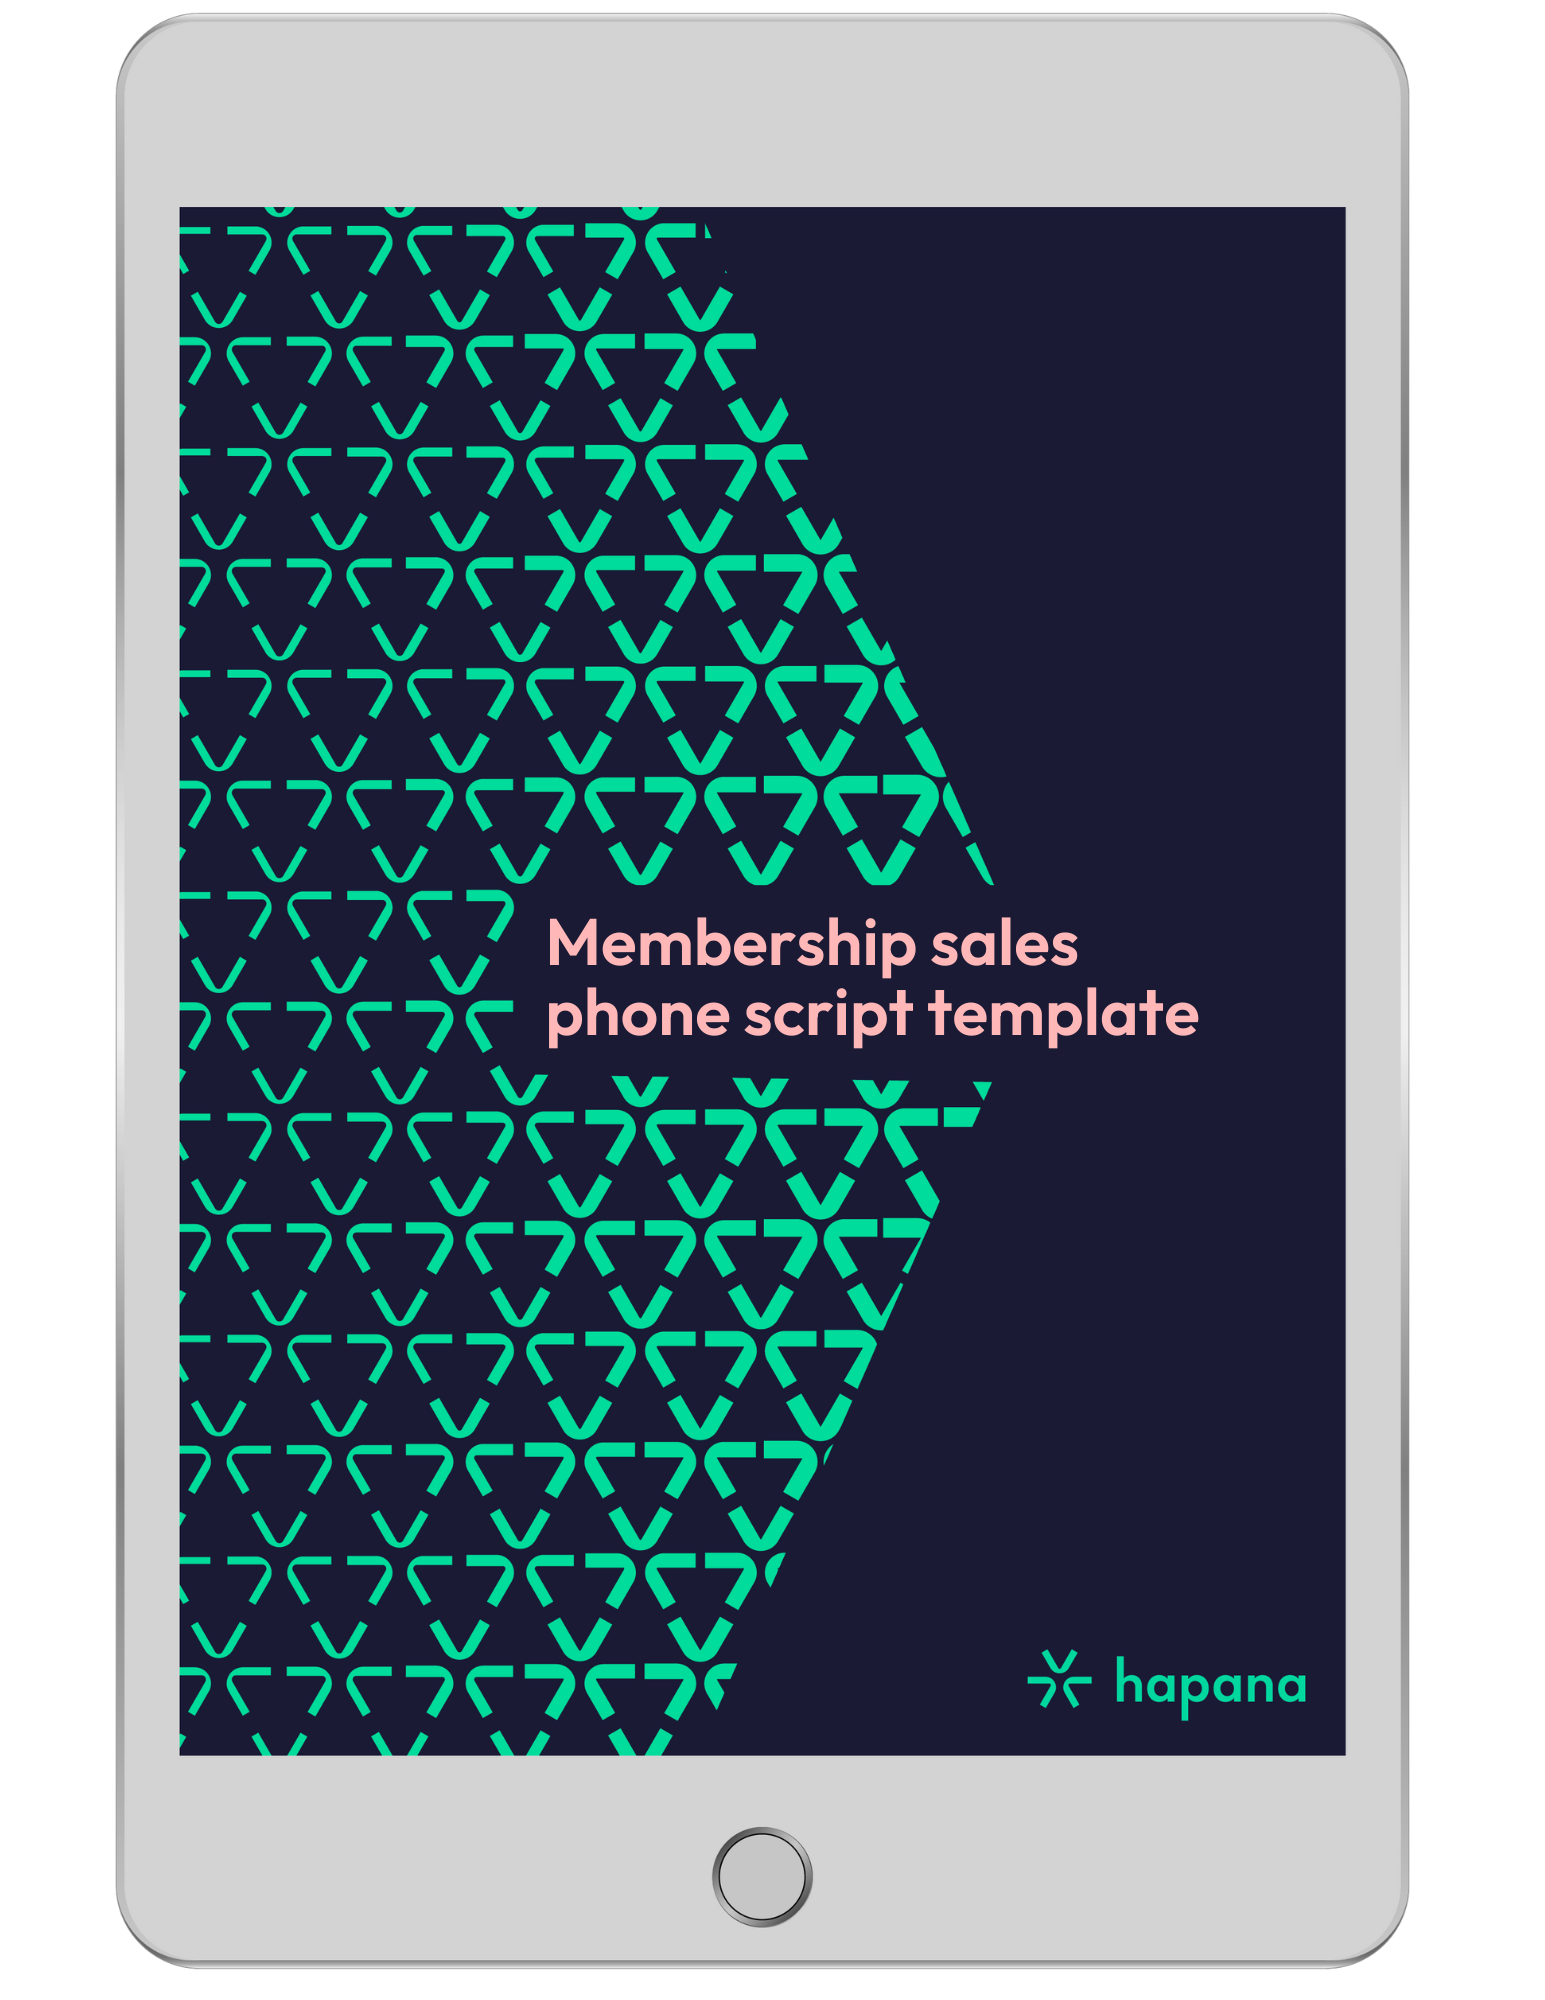 Membership sales phone script template